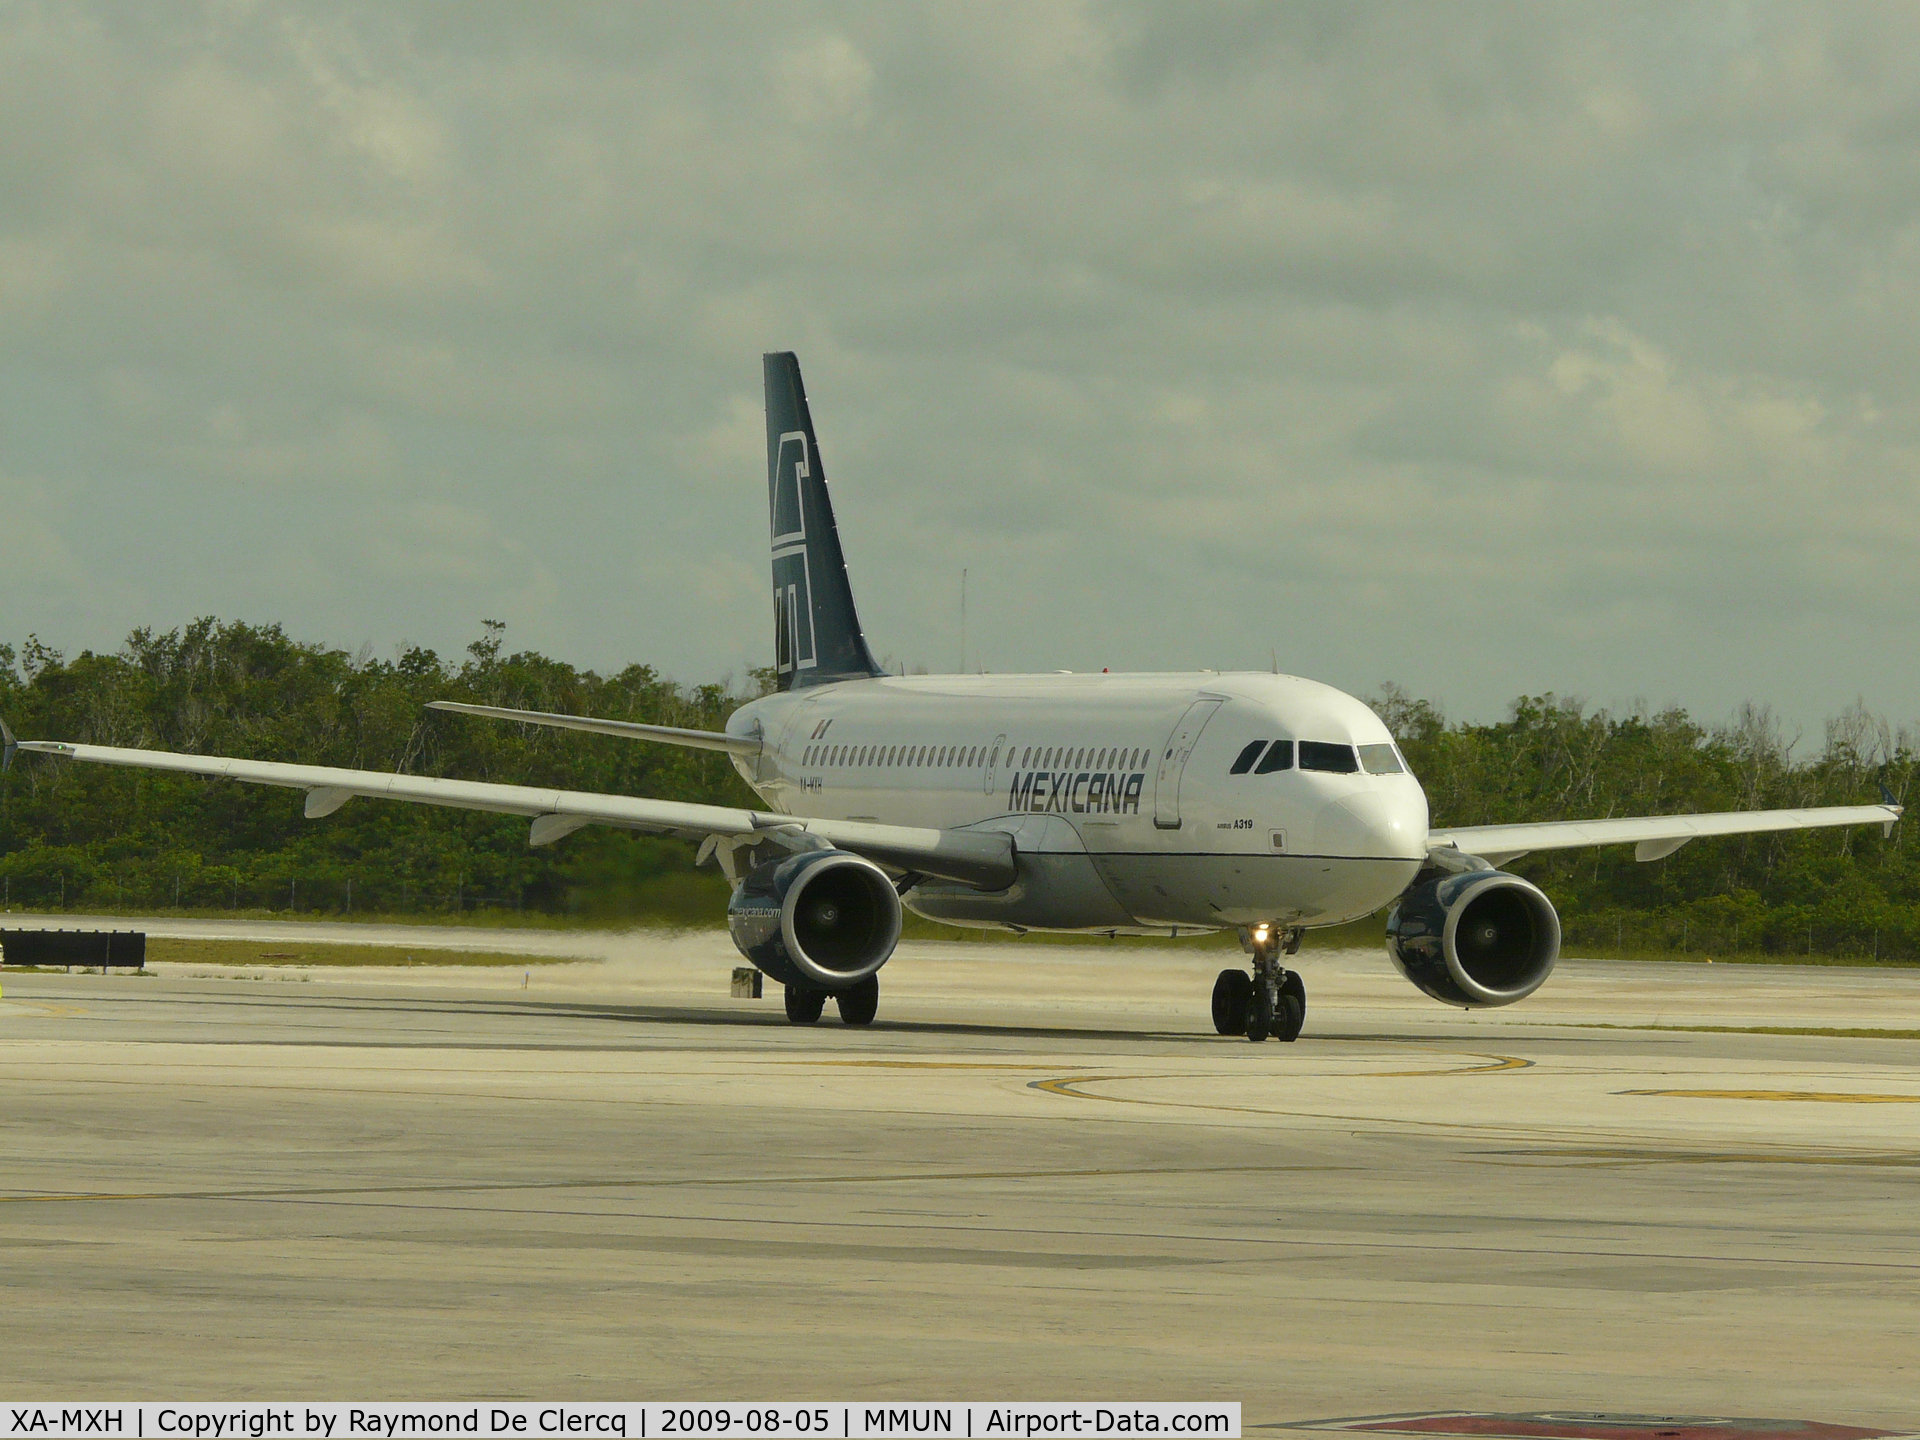 XA-MXH, 2002 Airbus A319-112 C/N 1673, Arriving at Cancun Airport.